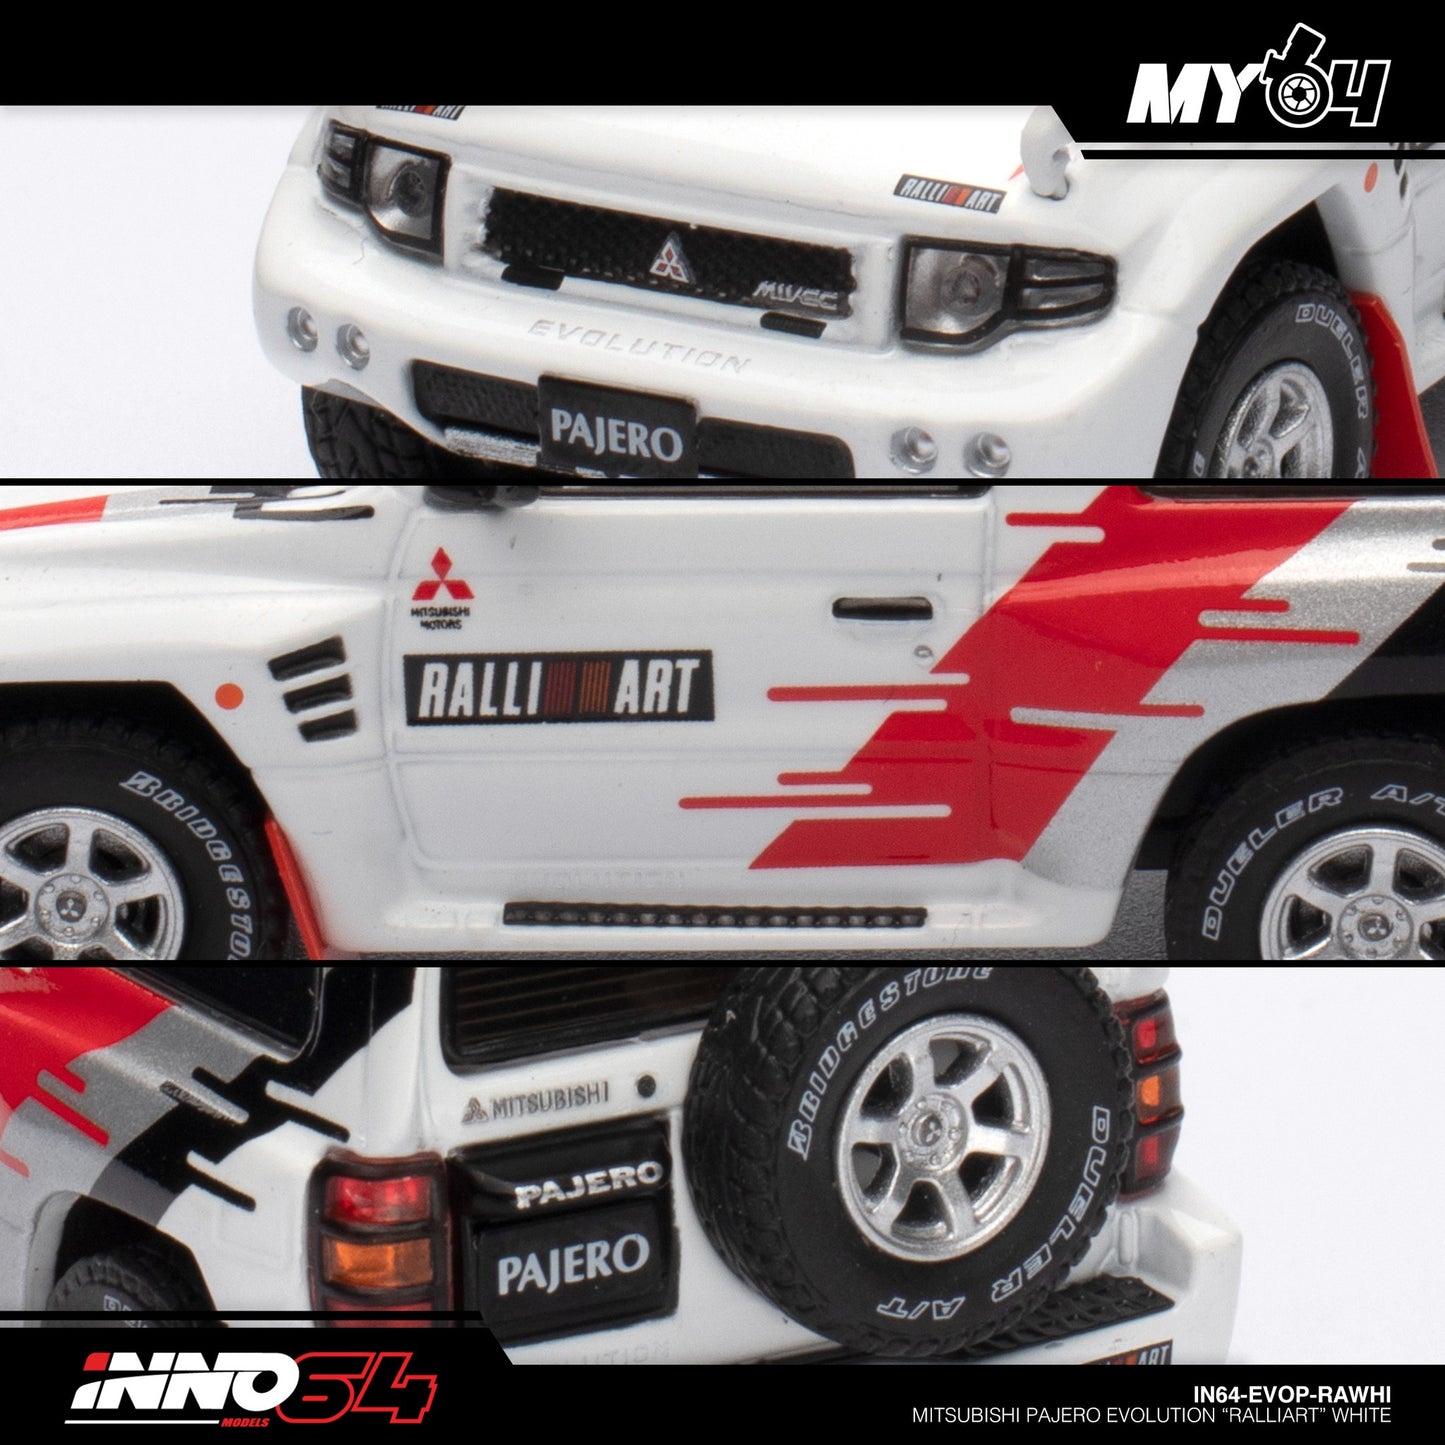 [INNO64] Mitsubishi Pajero Evolution "RALLIART" - White